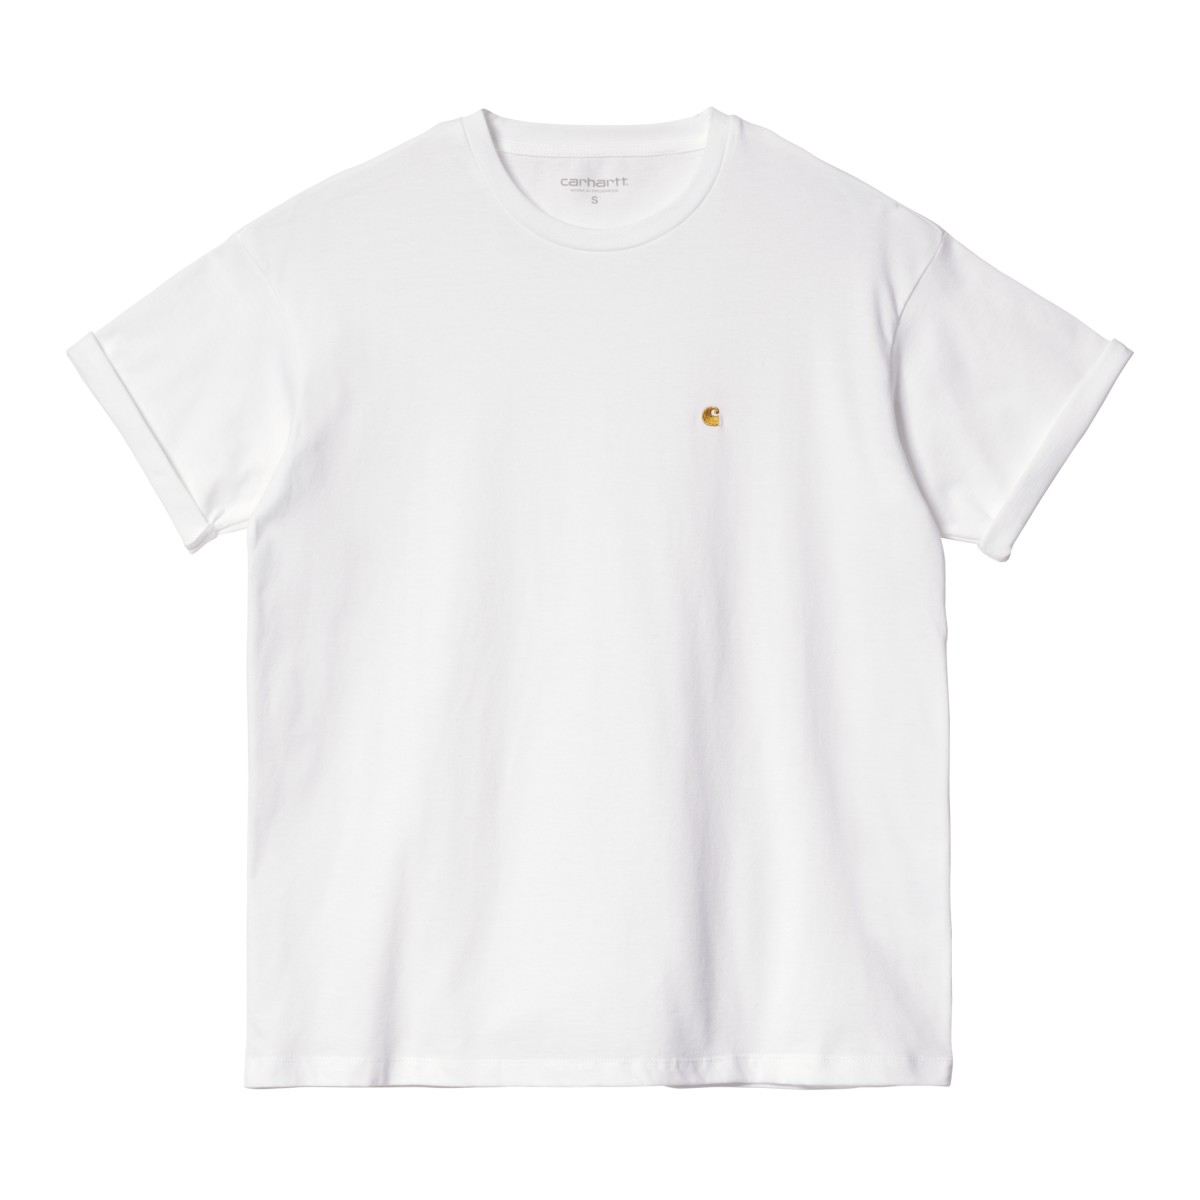 Carhartt WIP - Tshirt femme blanc à logo doré